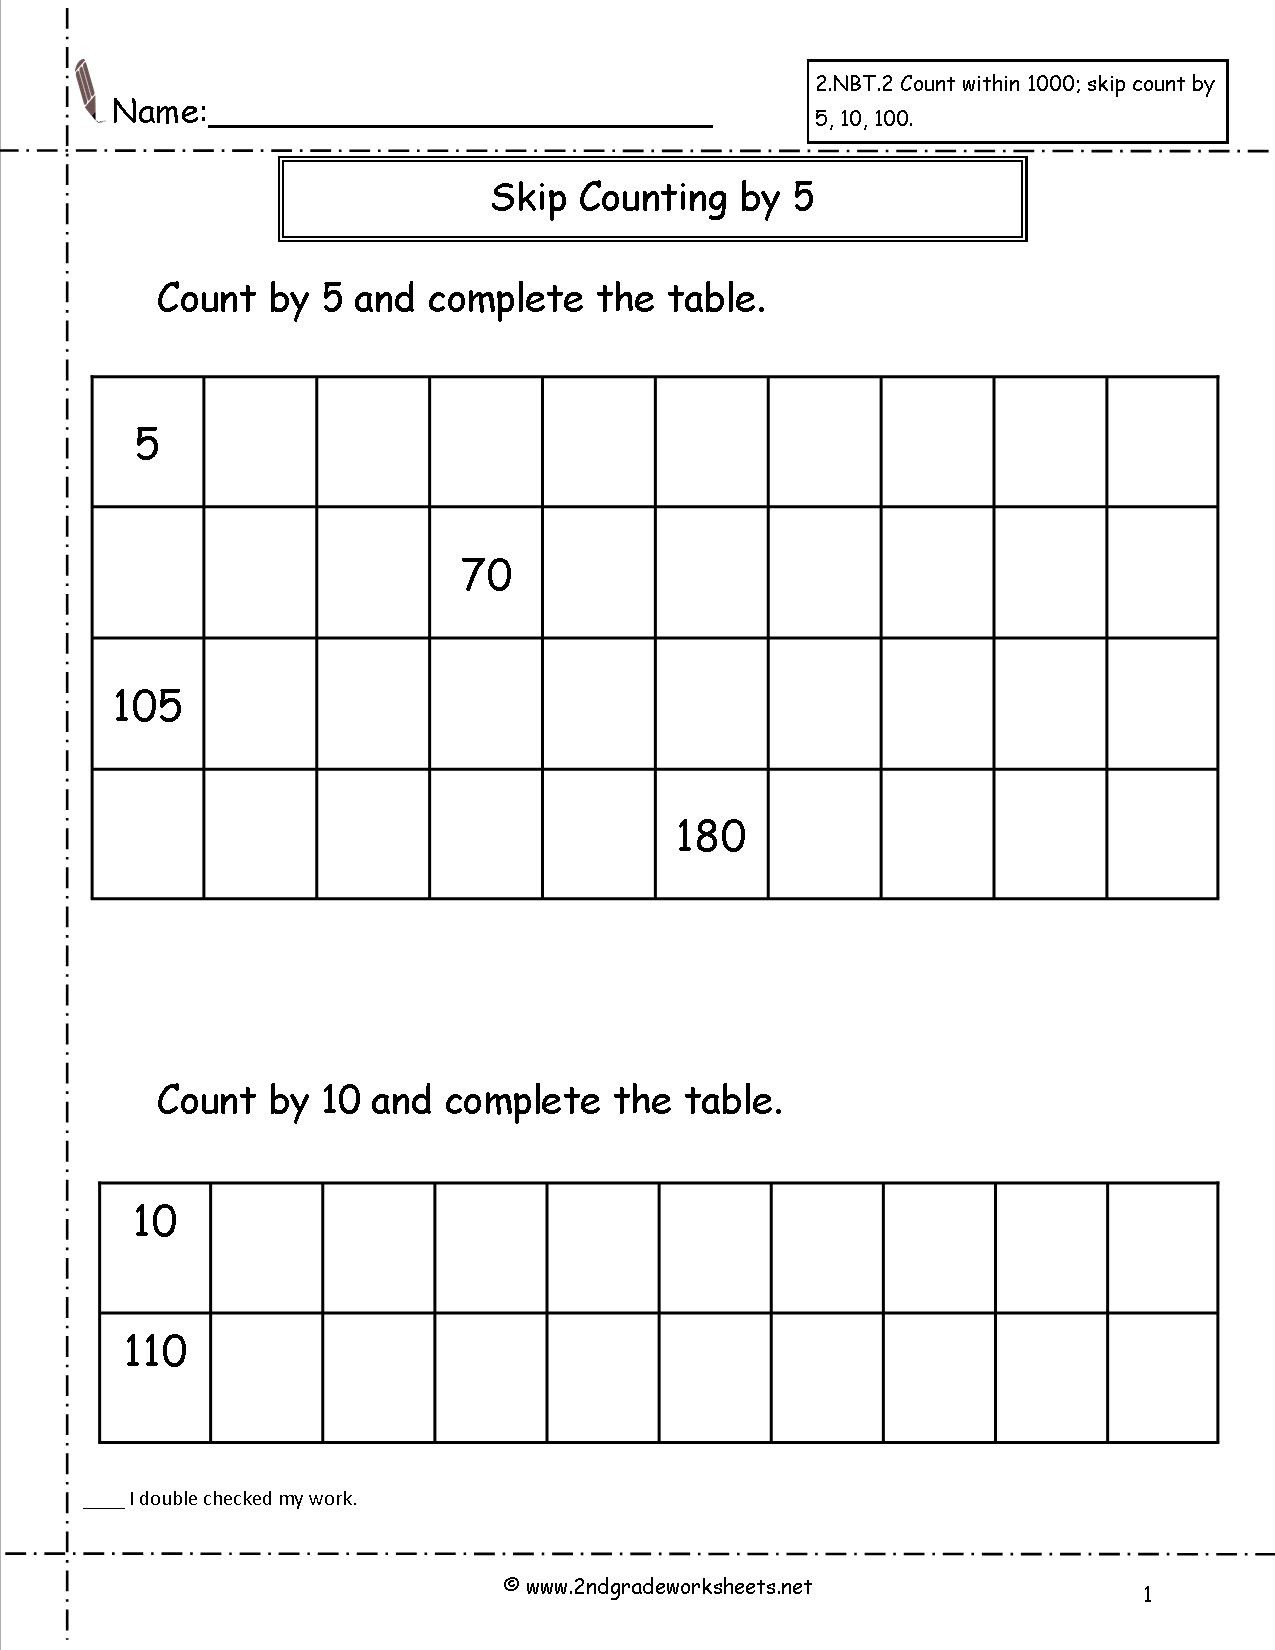 Skip Counting Worksheets 3rd Grade Free Skip Counting Worksheets